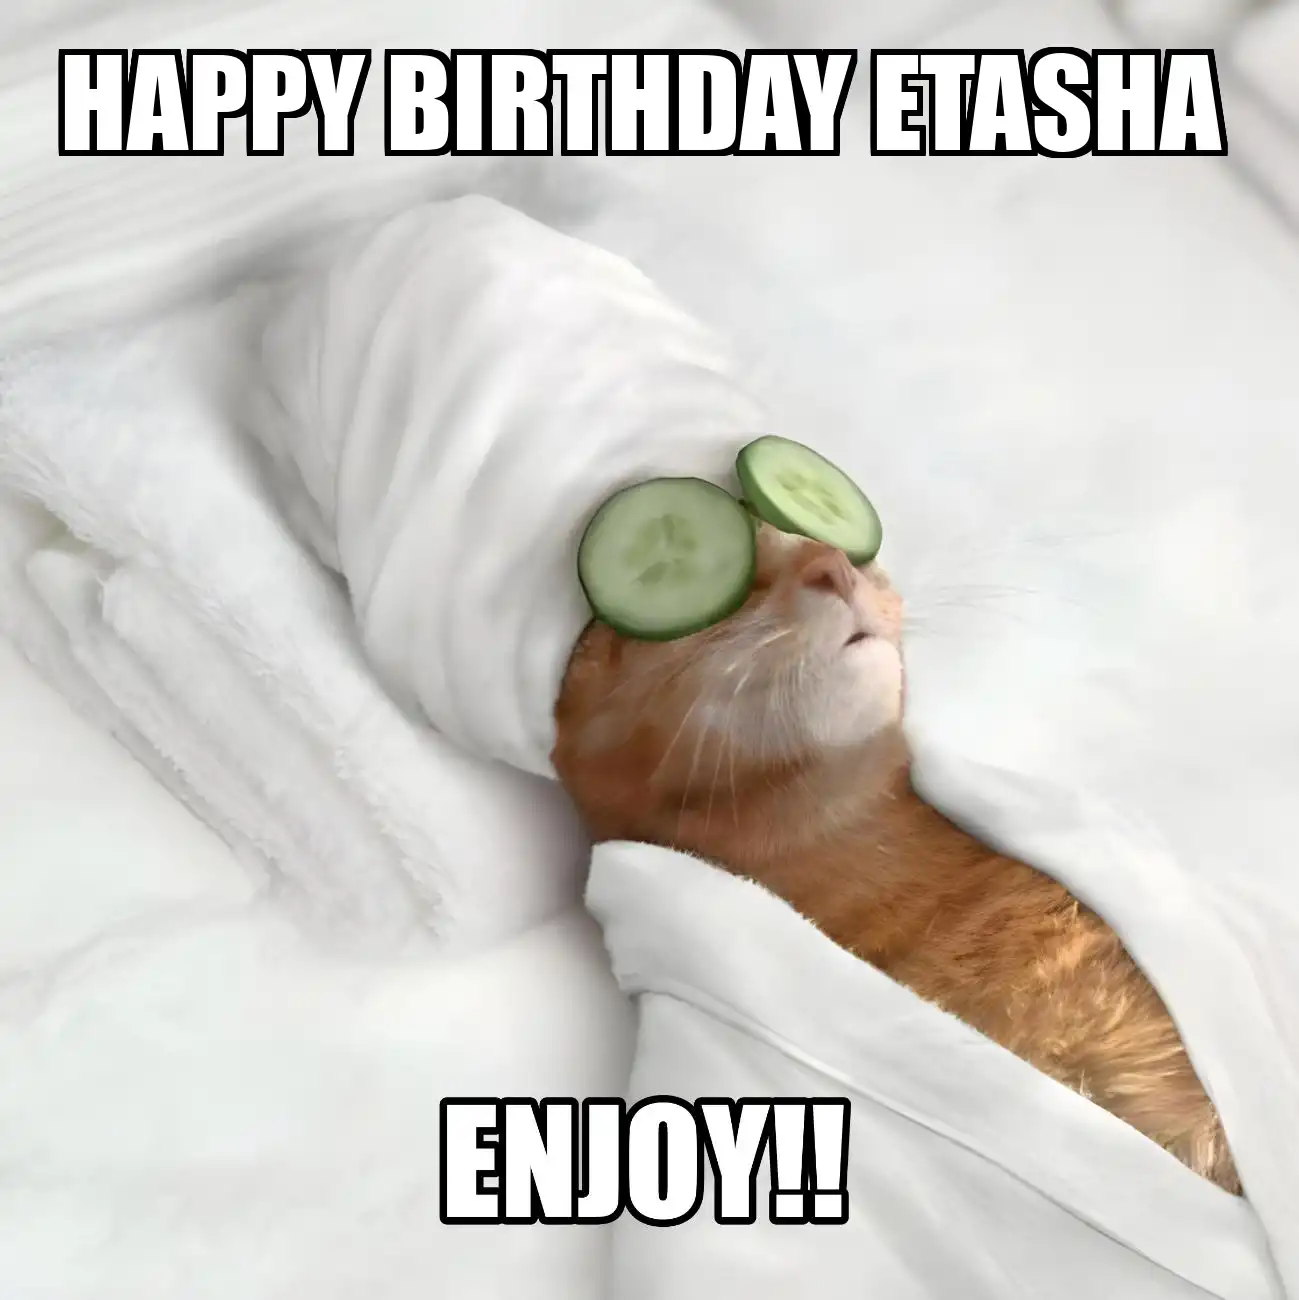 Happy Birthday Etasha Enjoy Cat Meme